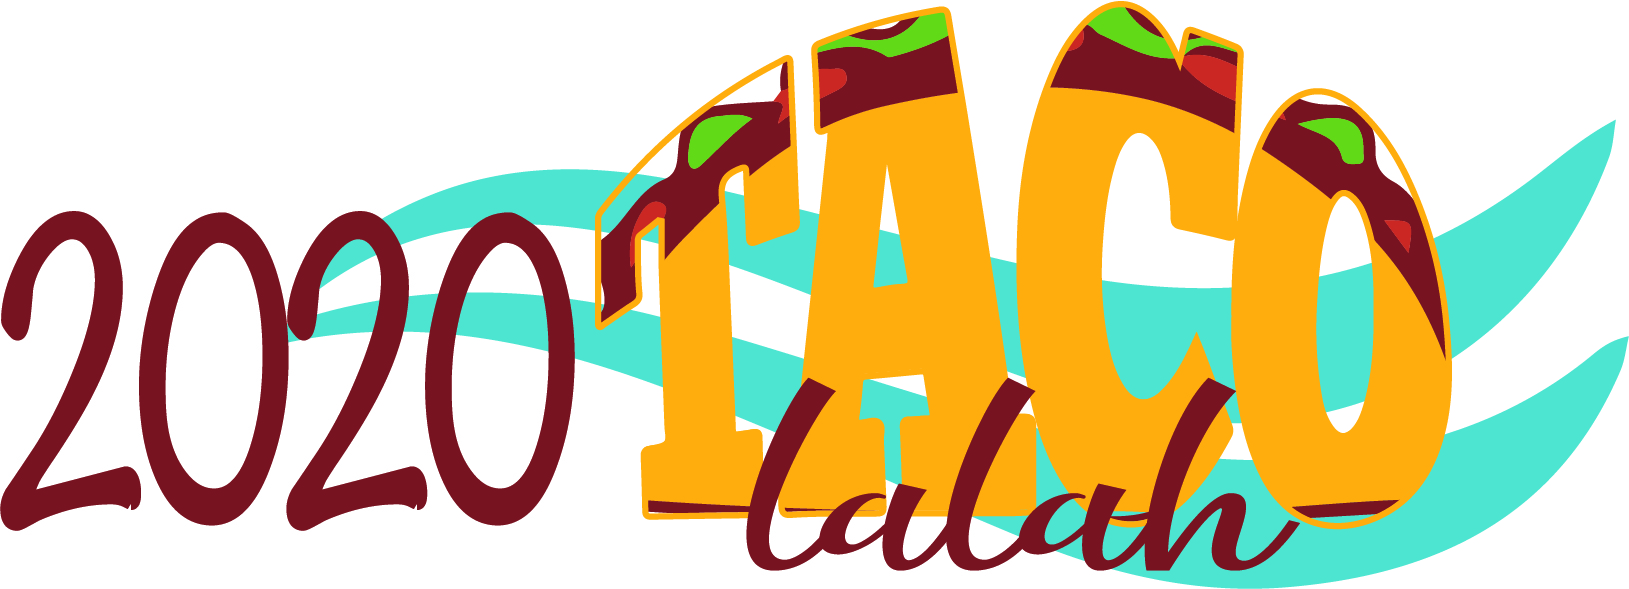 Second annual Tacolalah Festival announces logo design contest